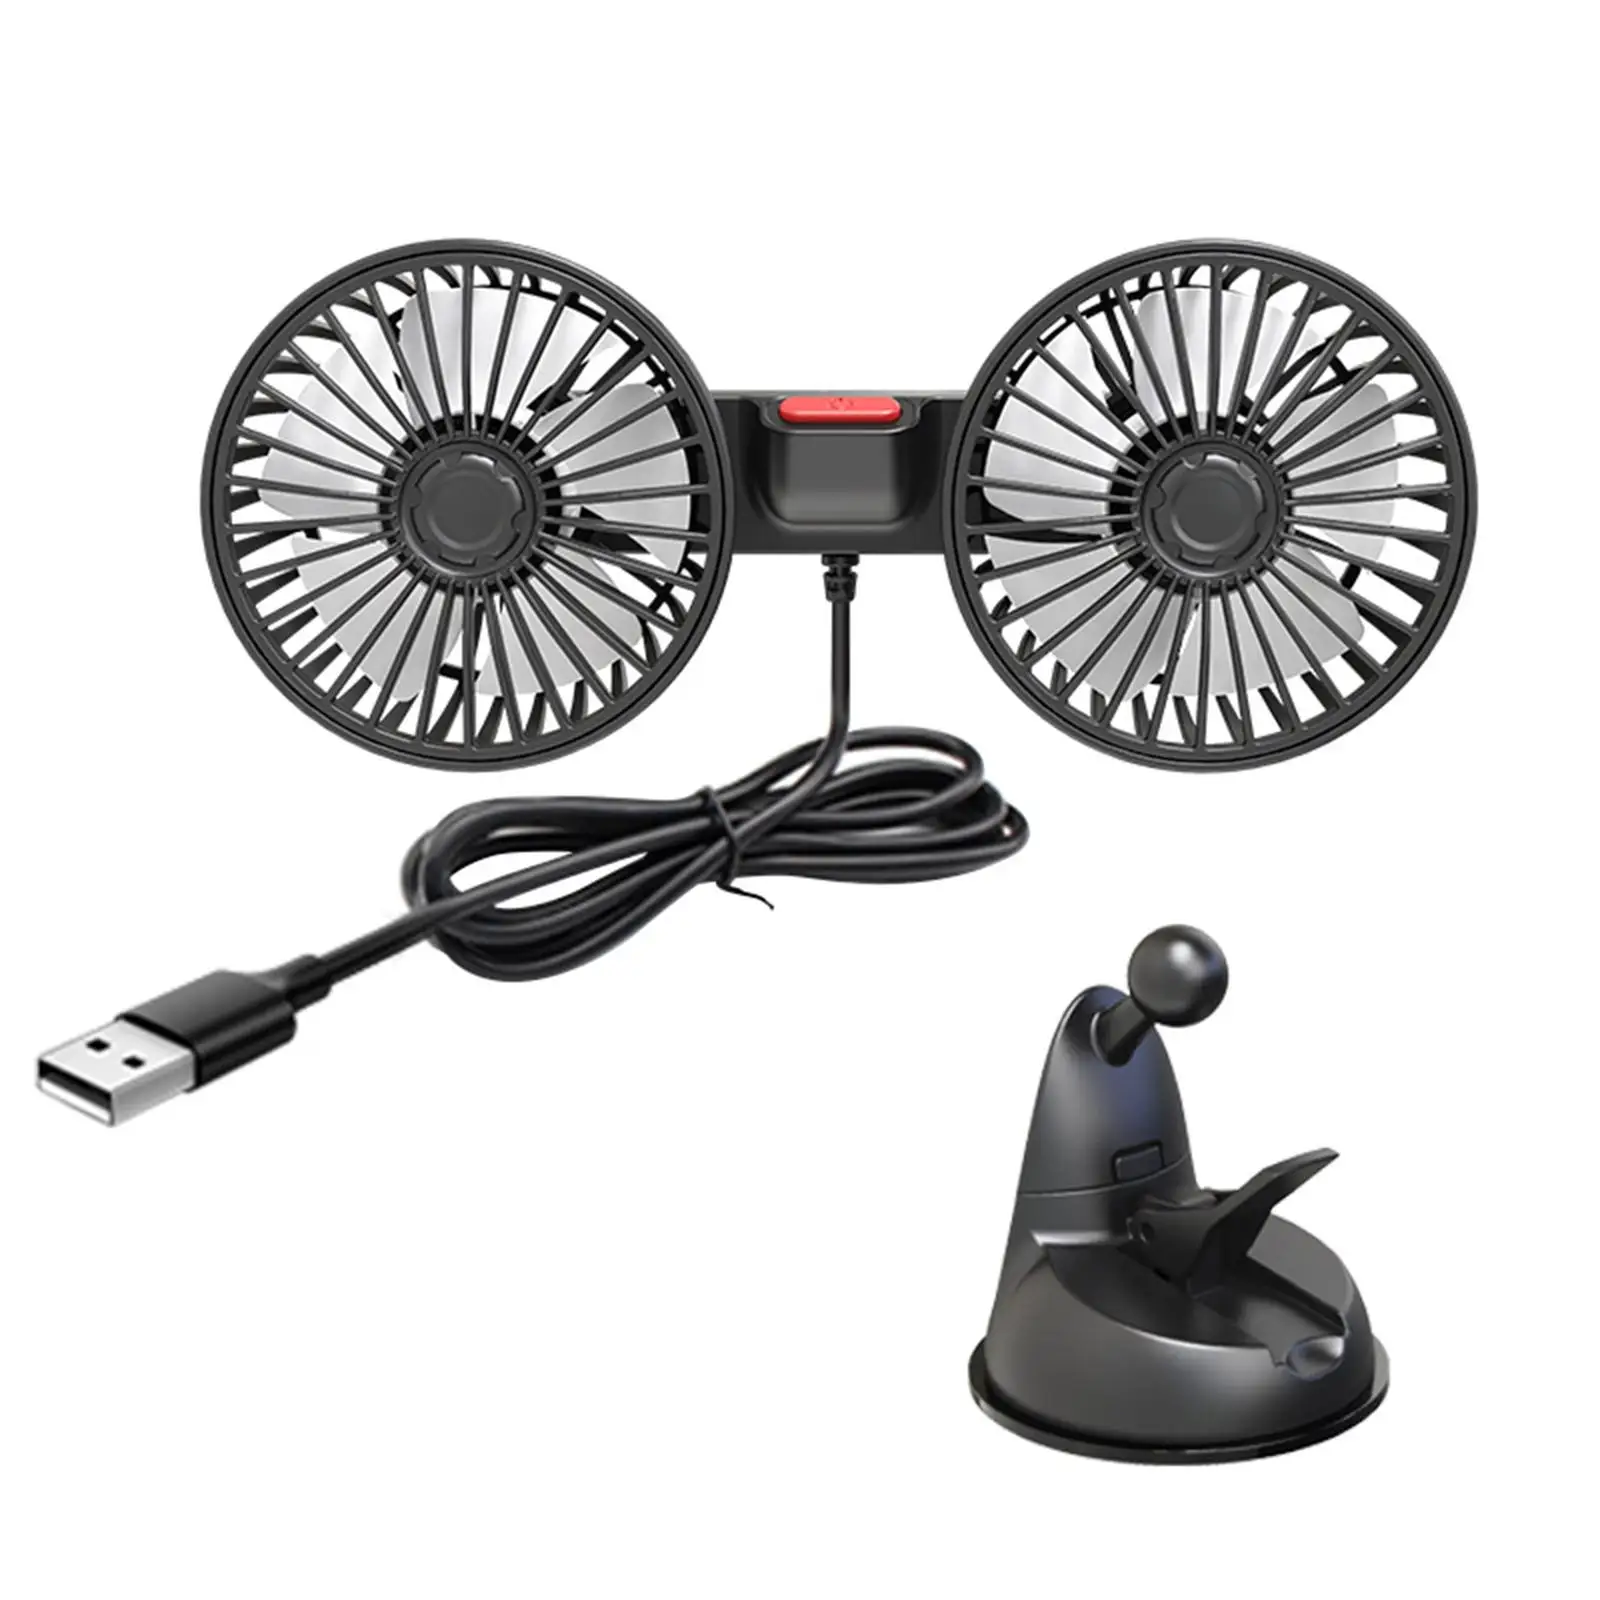 Car Cooling Air Fan USB Universal Auto Cooler Air for Truck Home Sedan